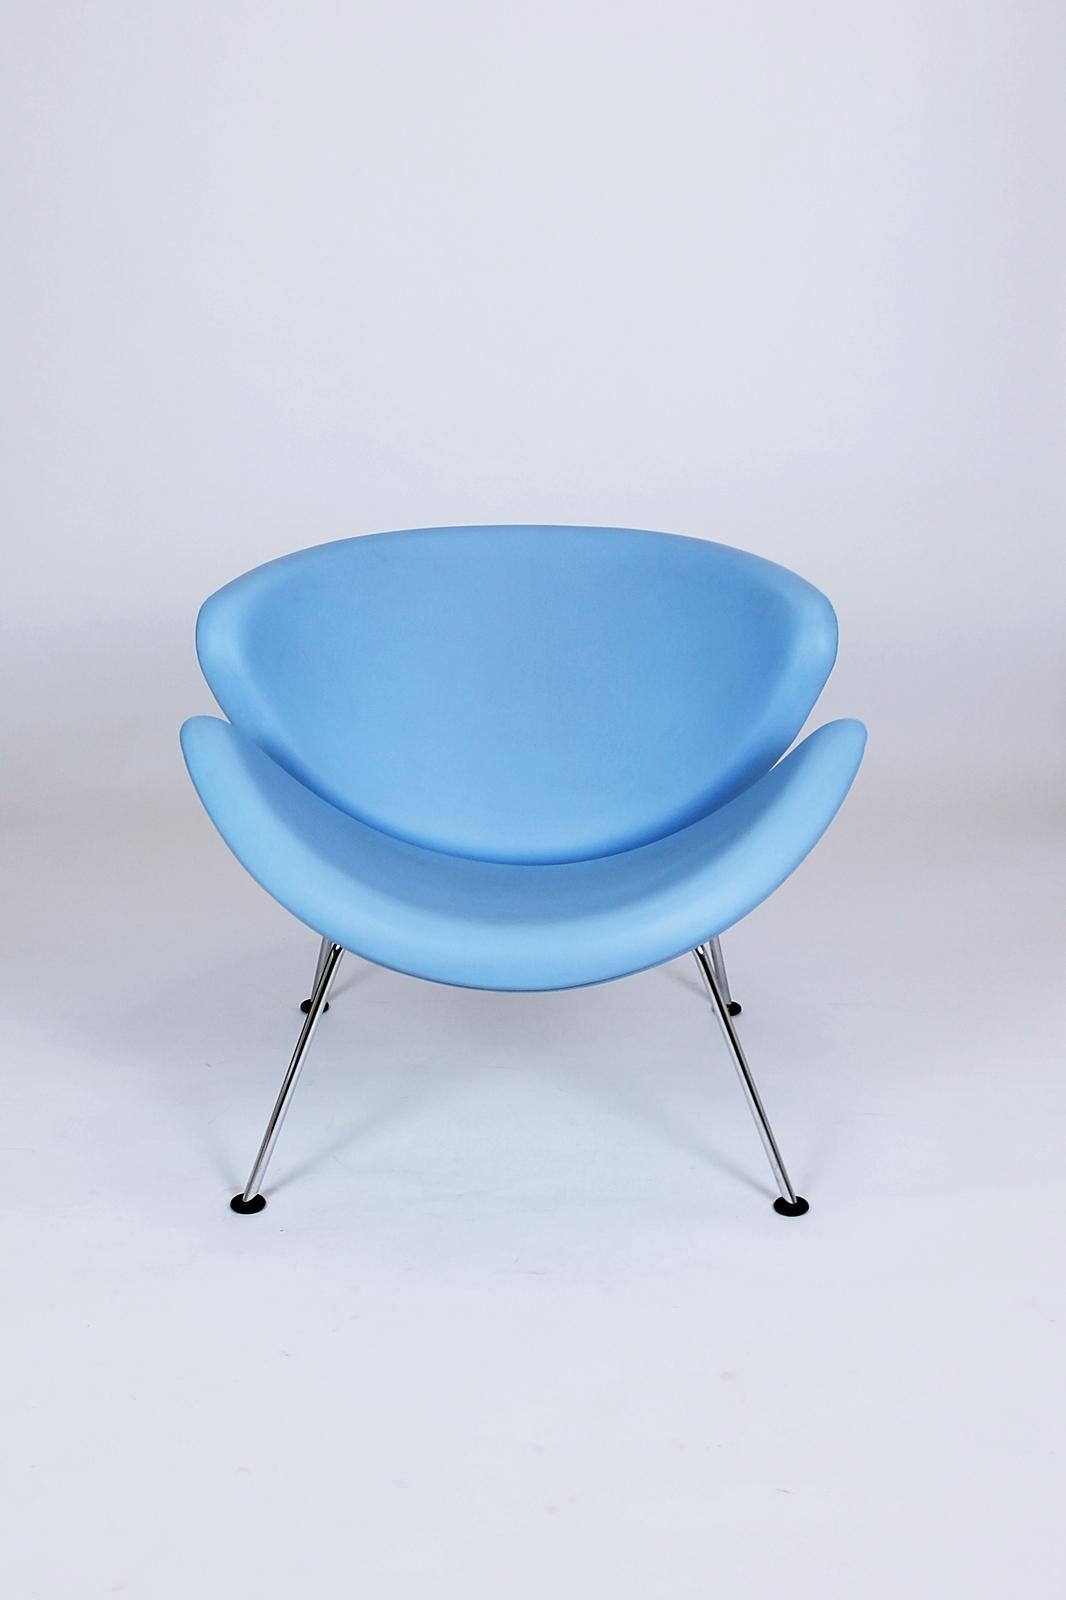 Pierre Paulin for Artifort Original Baby Blue Leather Orange Slice Chair 1